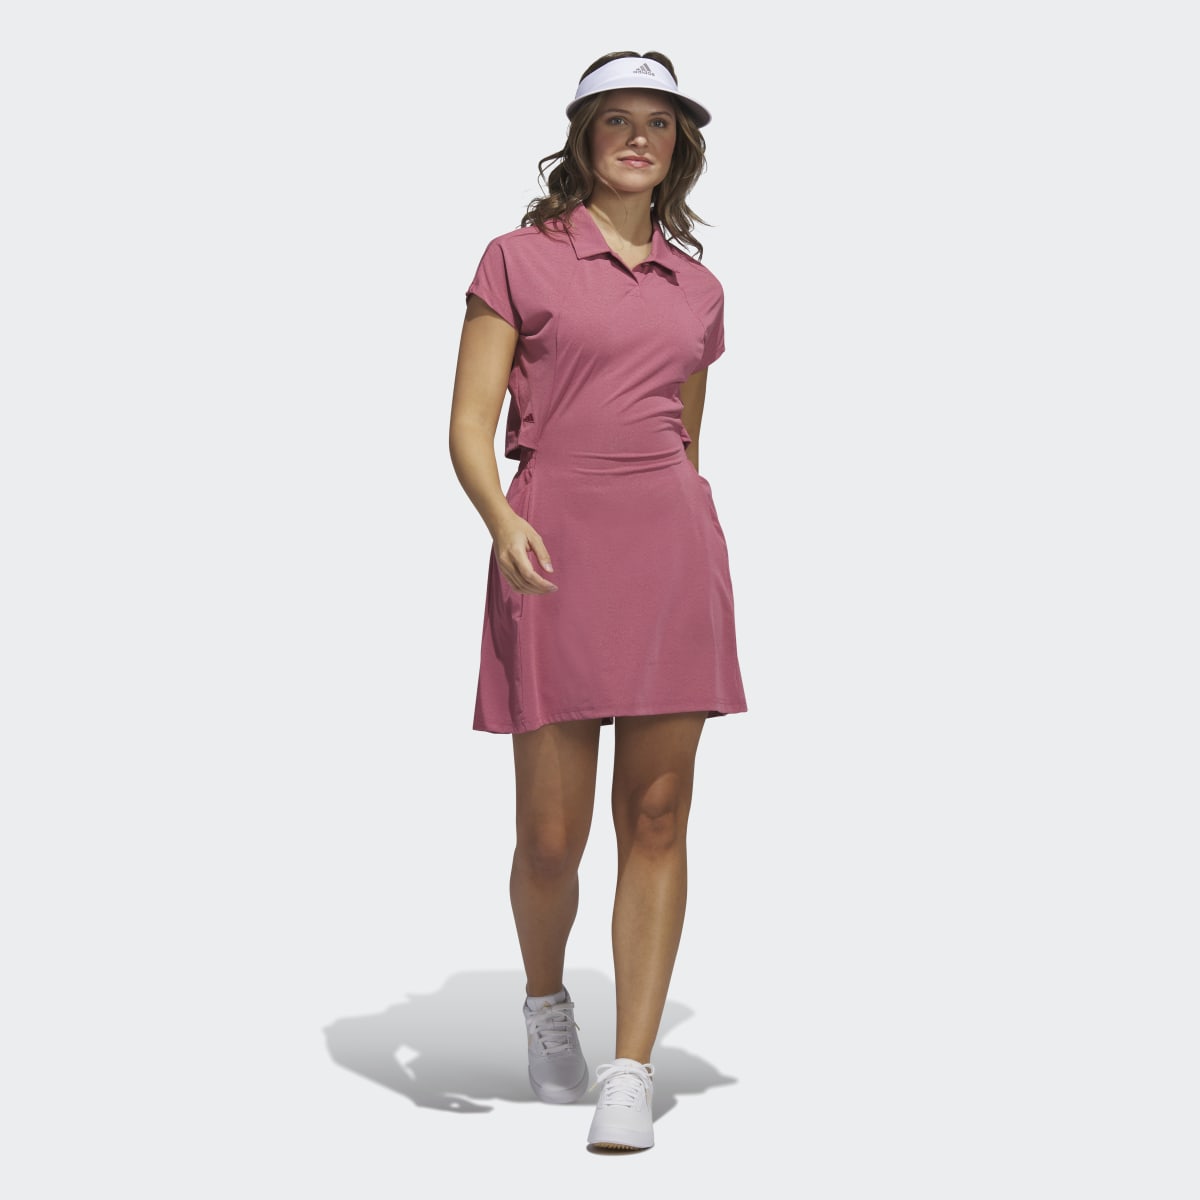 Adidas Go-To Golf Dress. 10